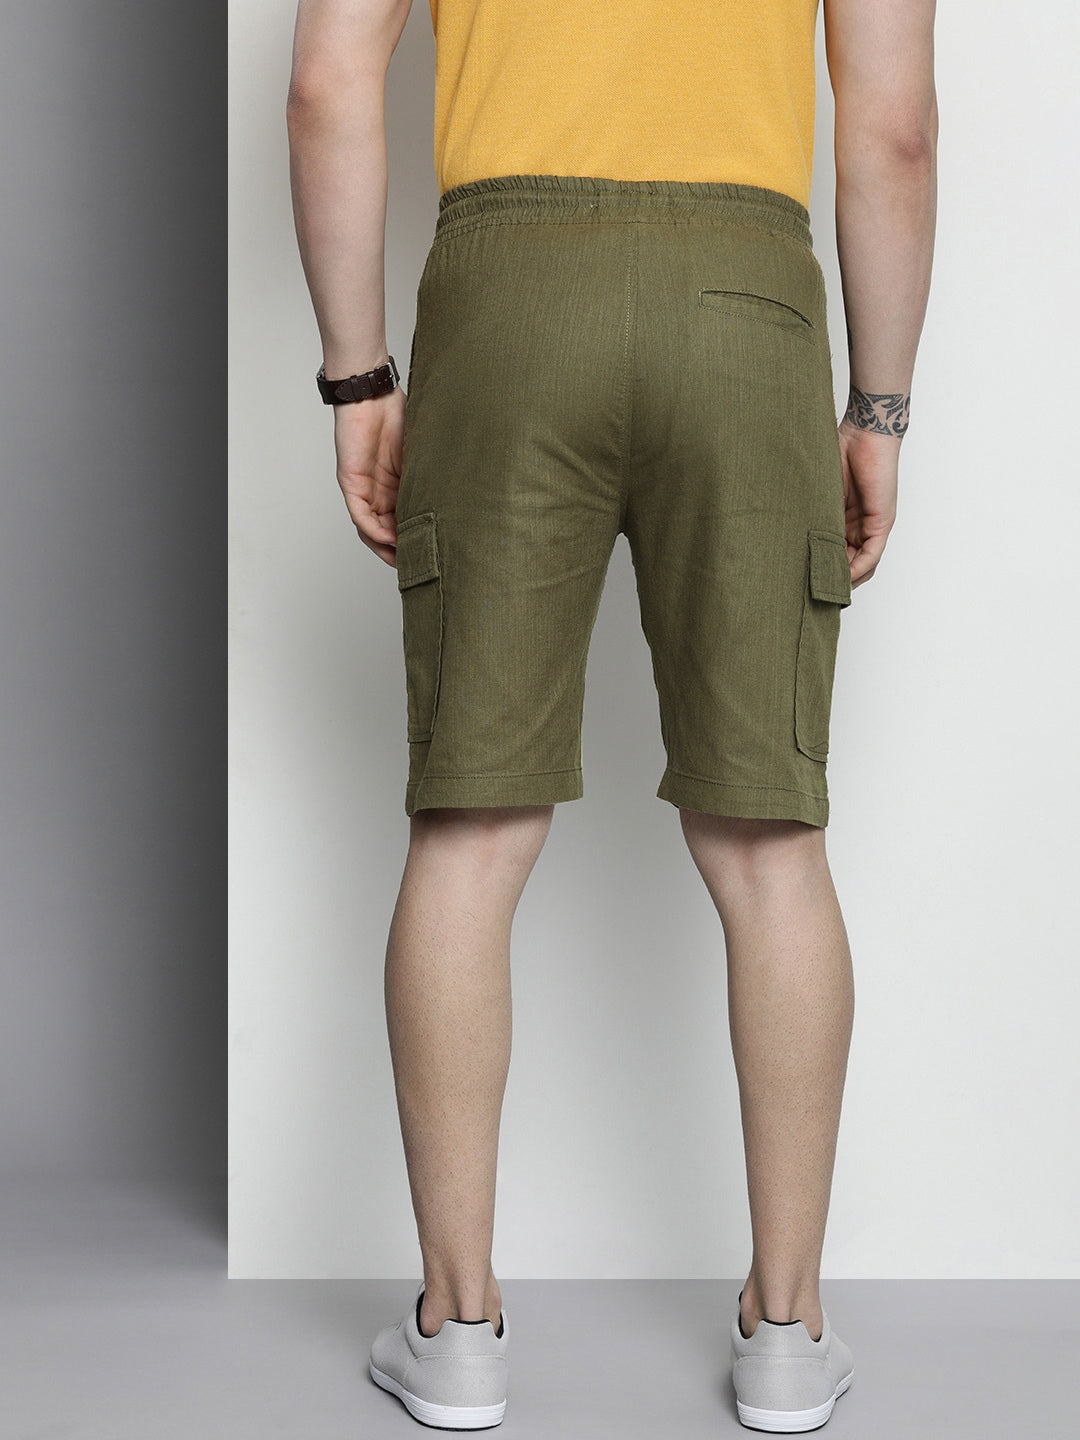 Shop Men Solid Shorts Online.